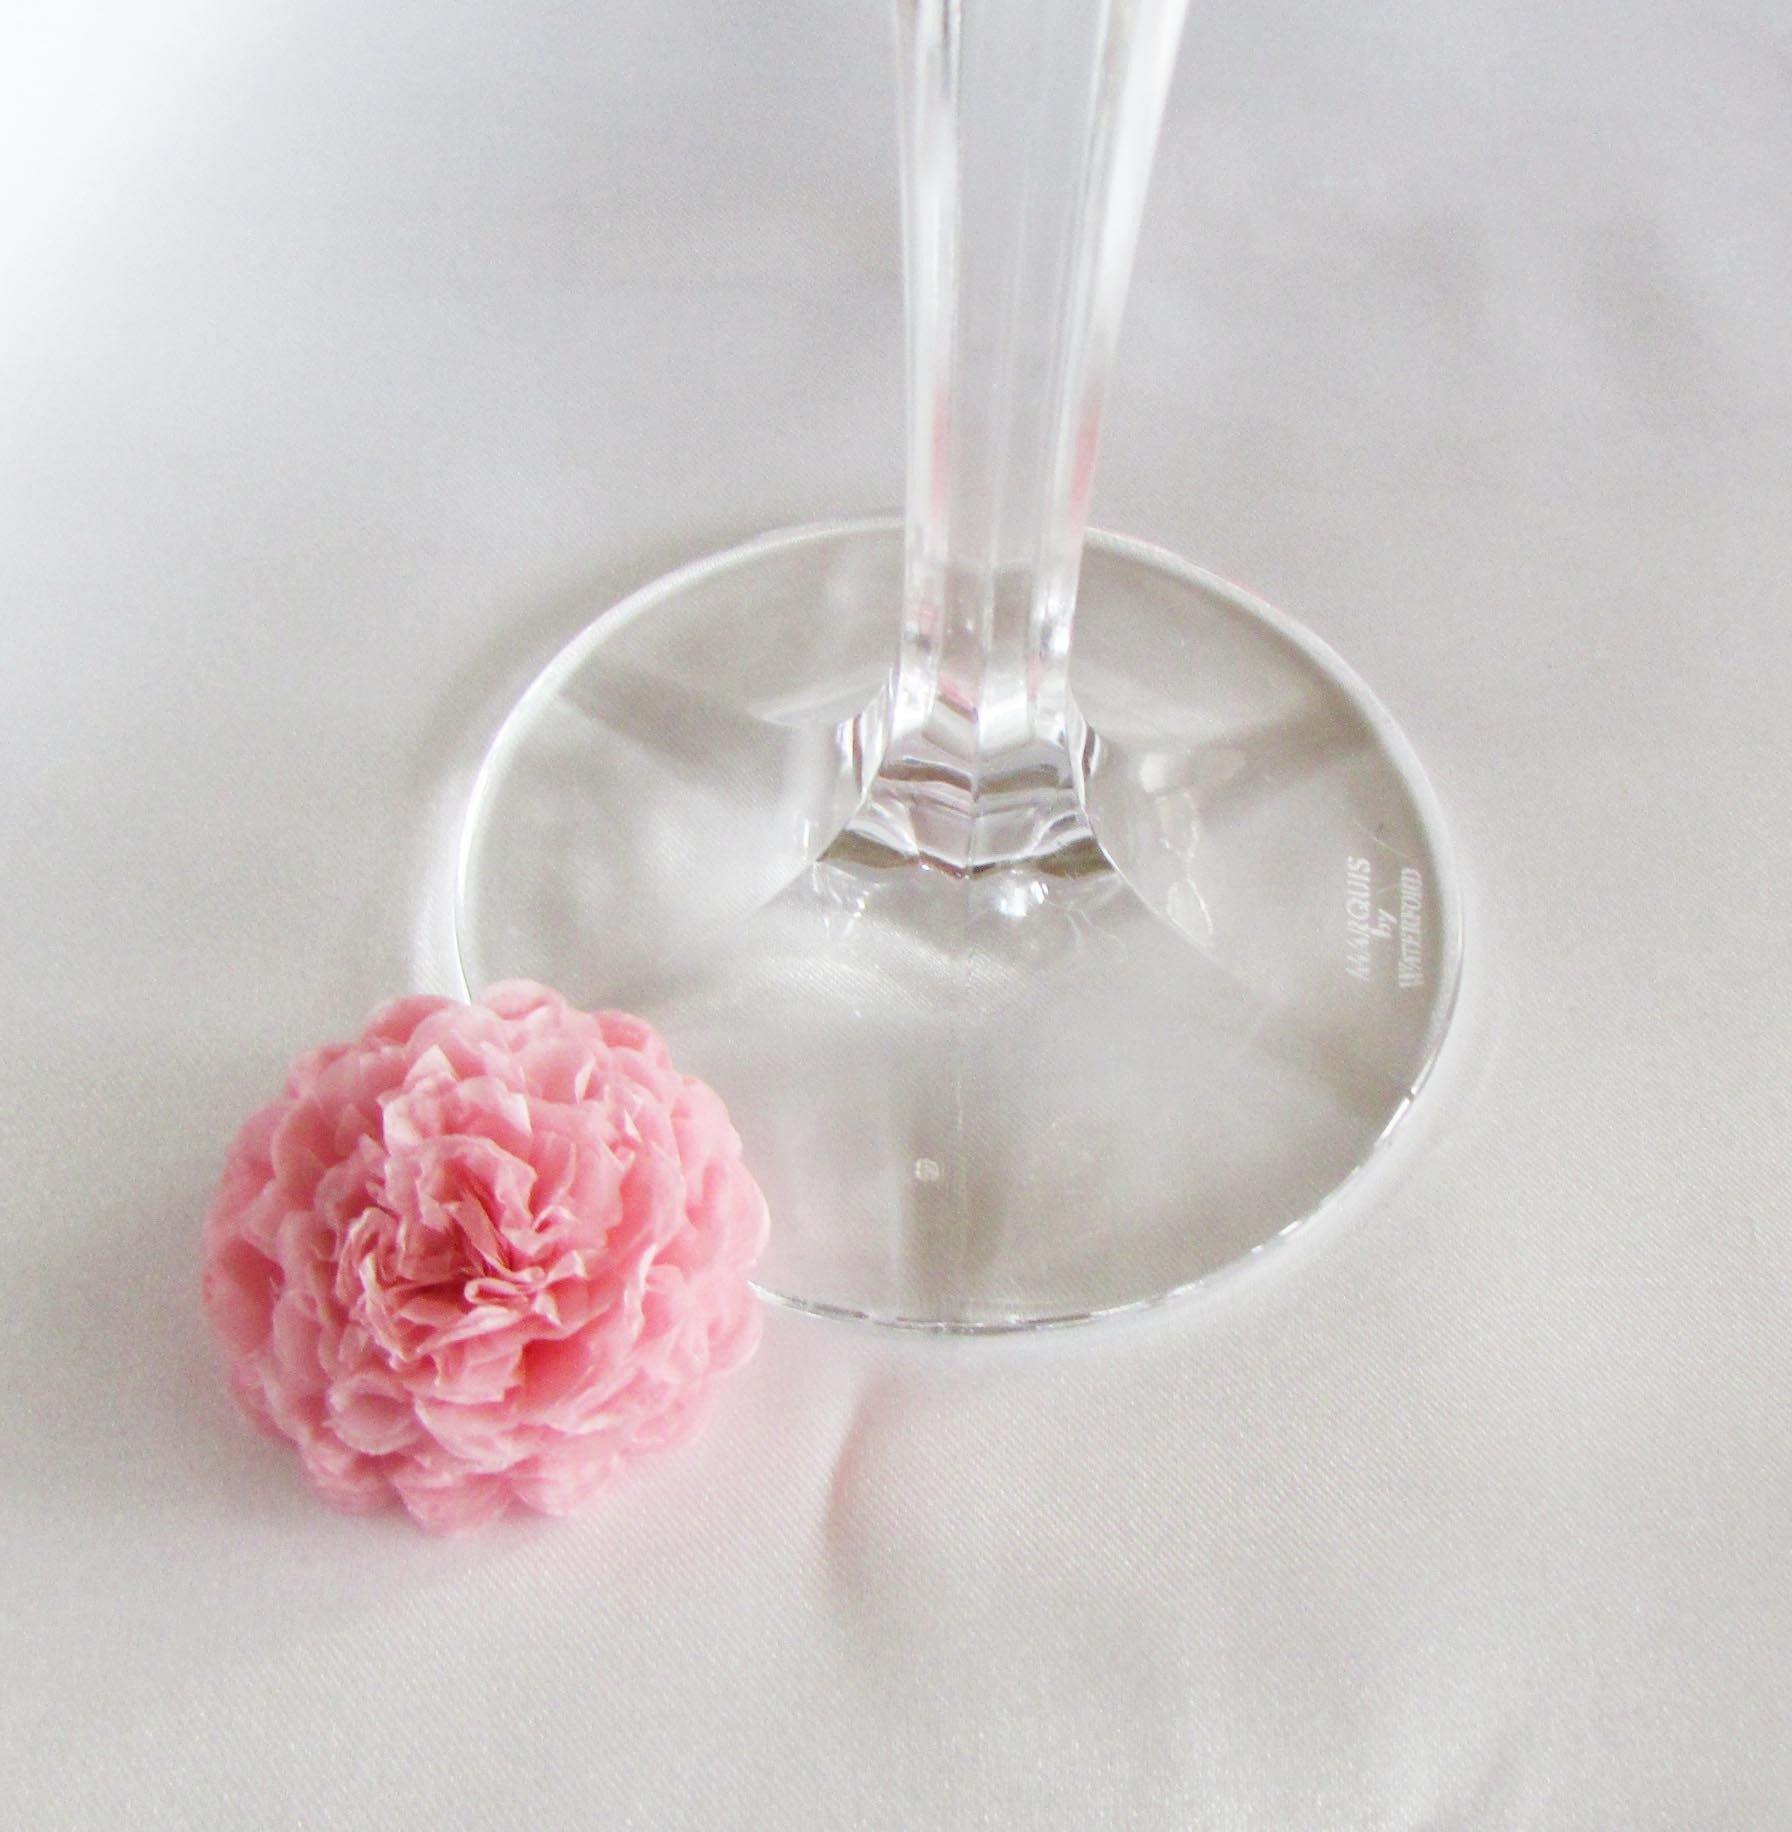 Baby Pink Button Mums Tissue Paper Flowers - Bickiboo Designs